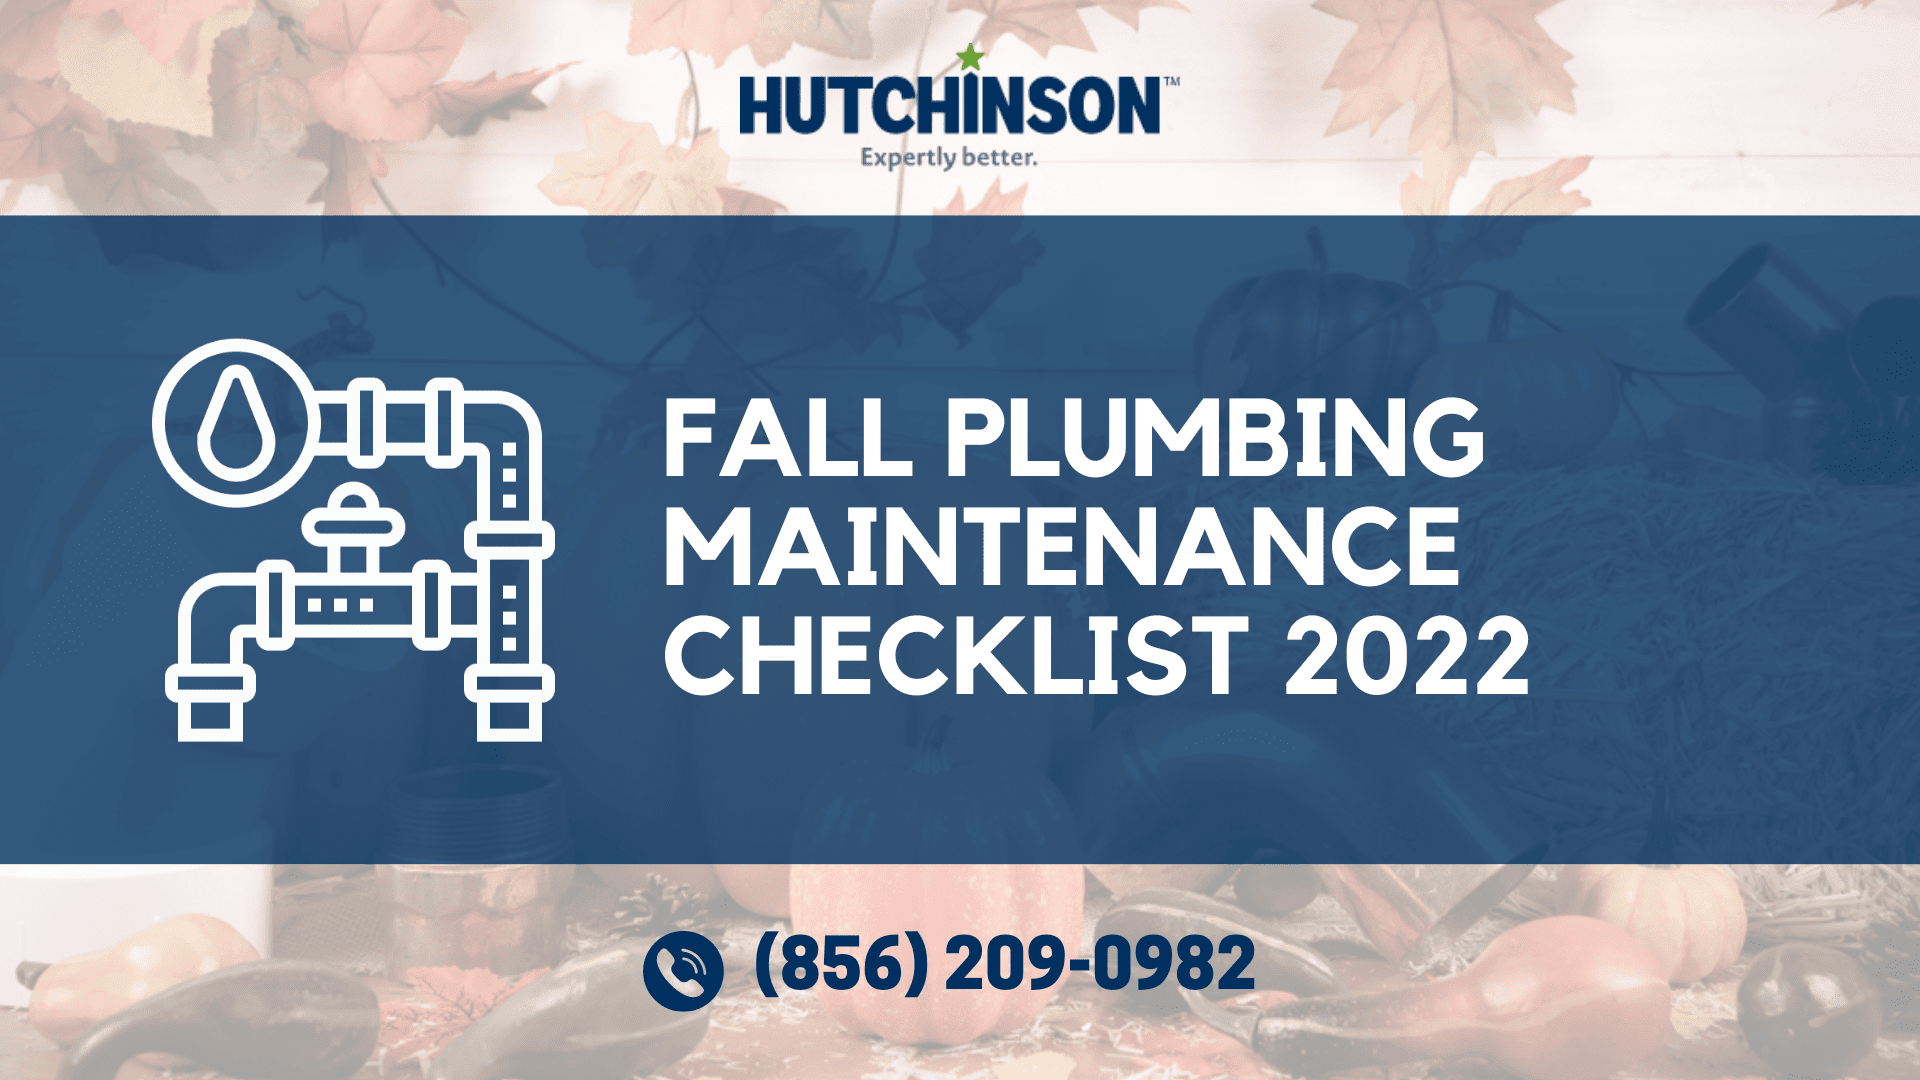 Hutchinson’s Fall Plumbing Maintenance Checklist 2022